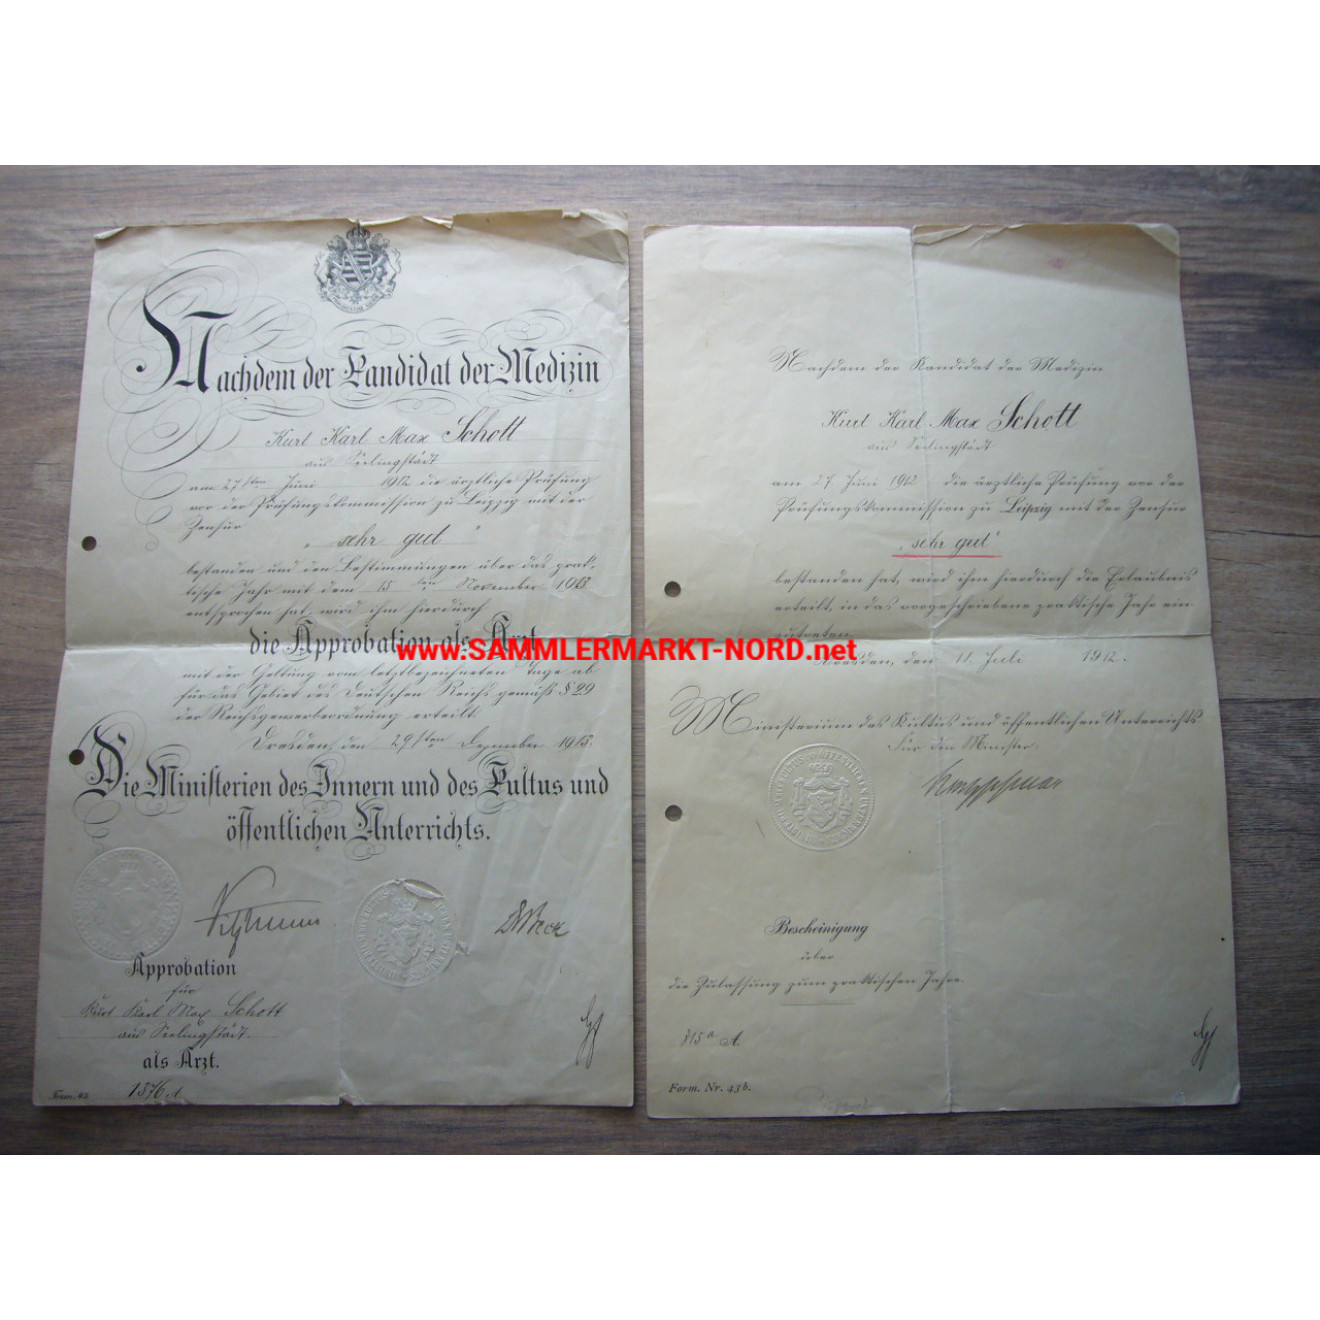 License to practice medicine 1912/13 - certificates